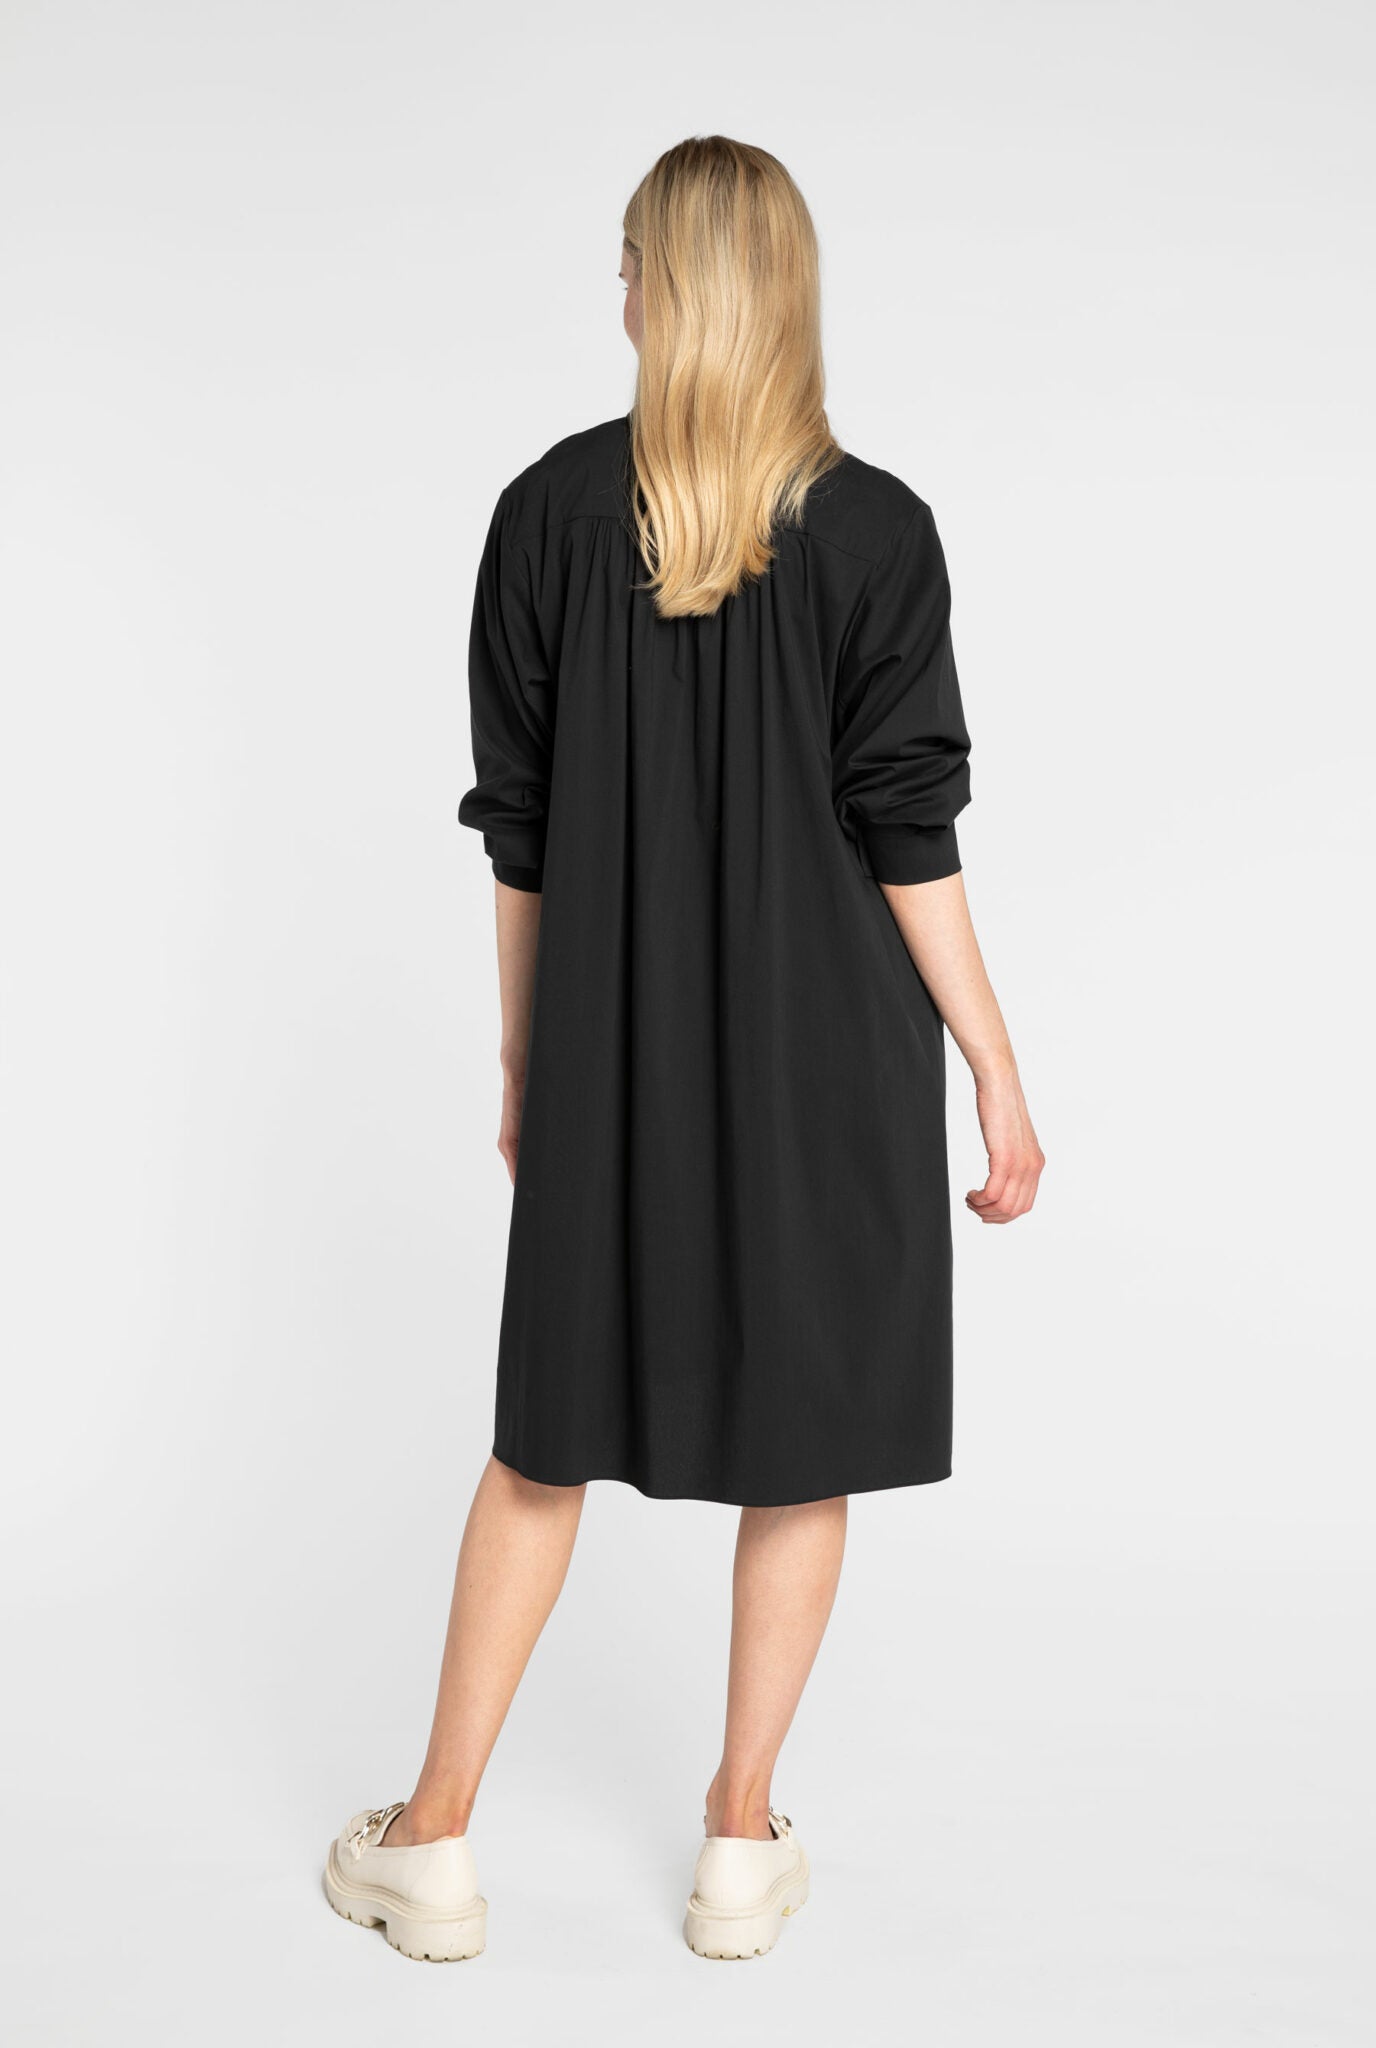 Frances Poplin Shirt Dress, Black